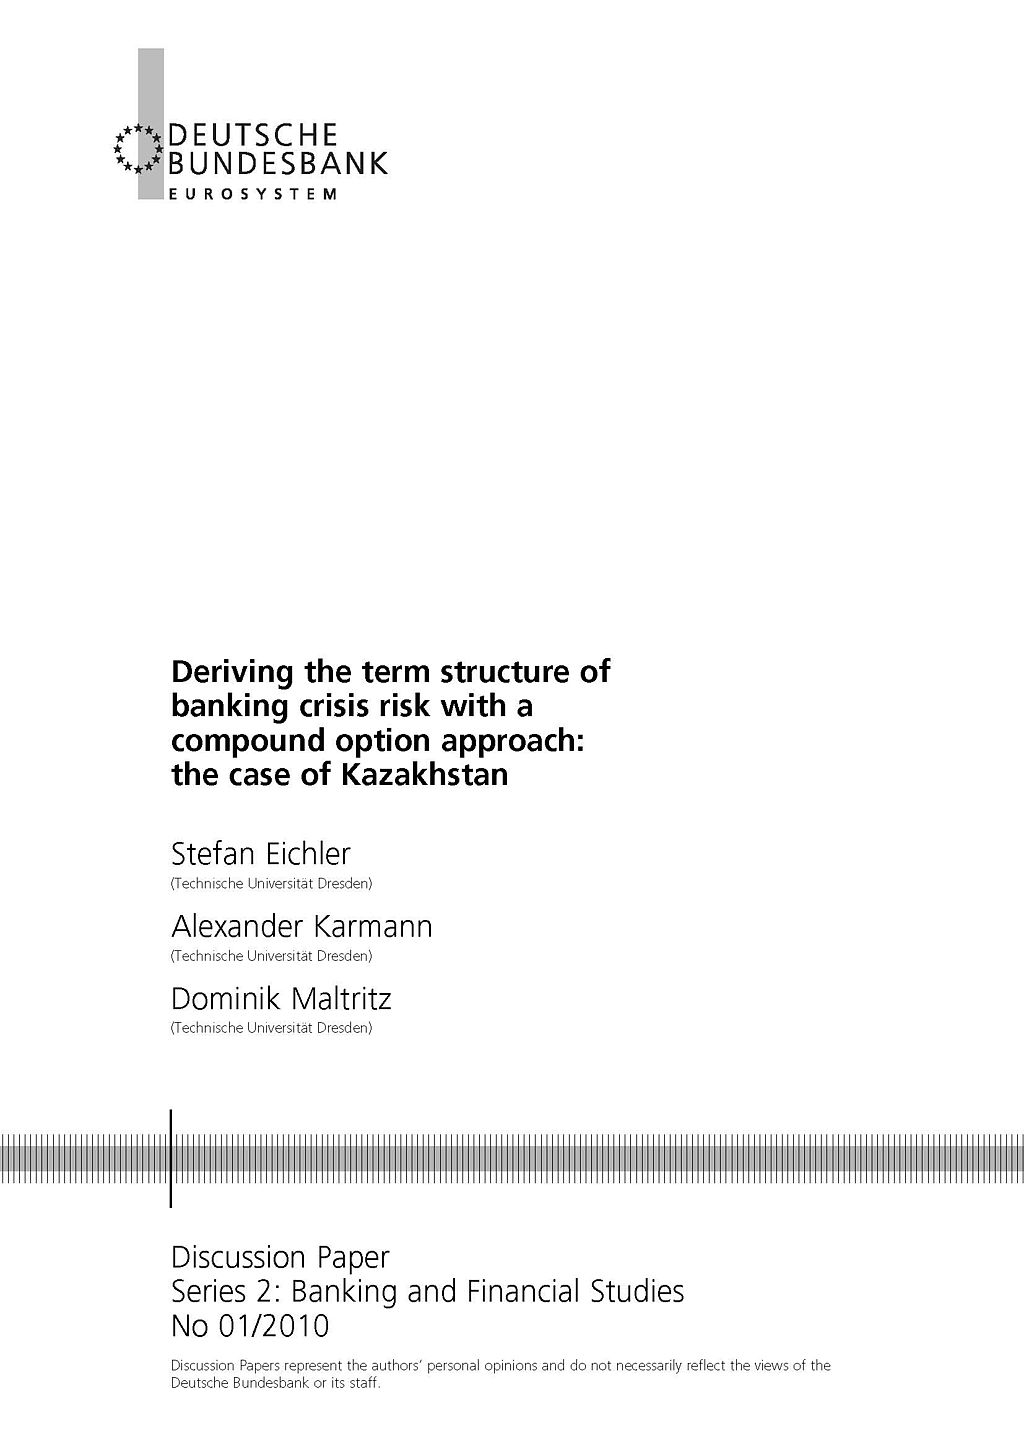 cover_Deutsche-Bundesbank-Discussion-Paper_2010-01.jpg